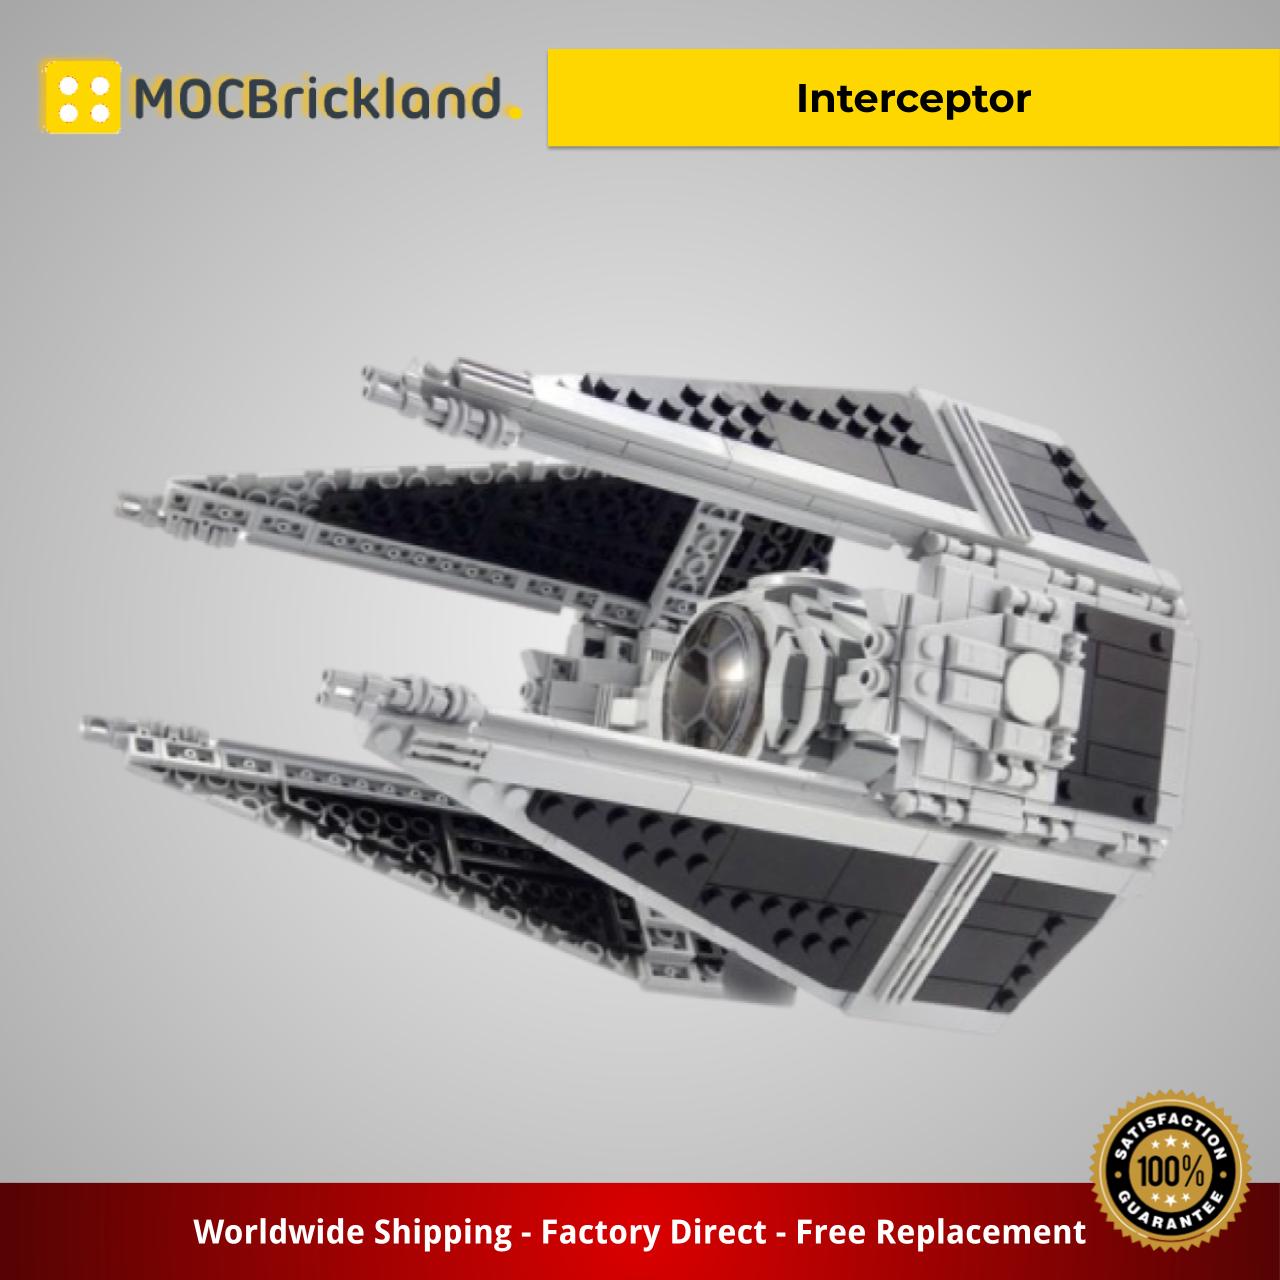 MOCBRICKLAND MOC 20850 Interceptor